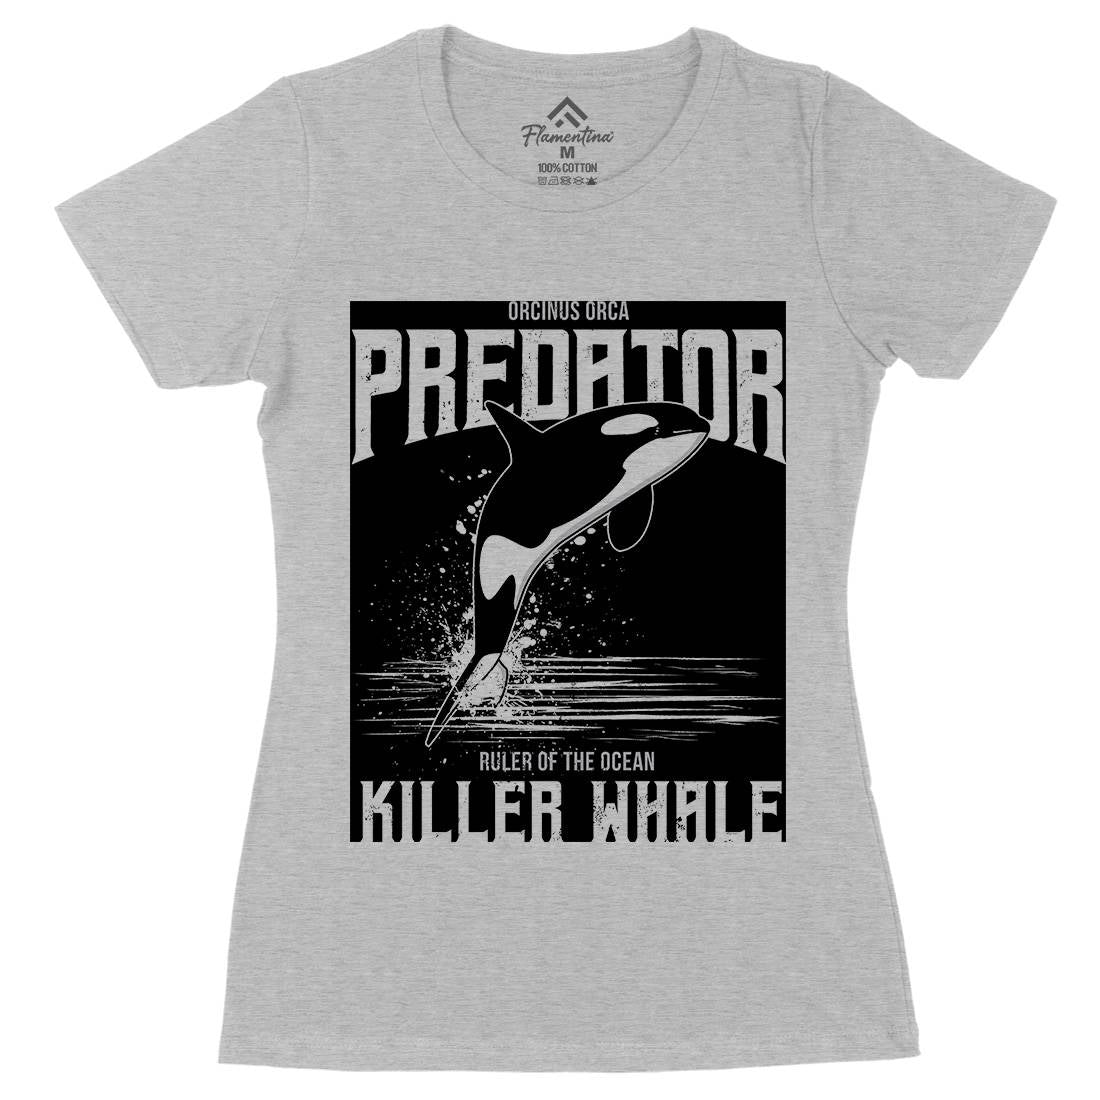 Orca Predator Womens Organic Crew Neck T-Shirt Animals B741